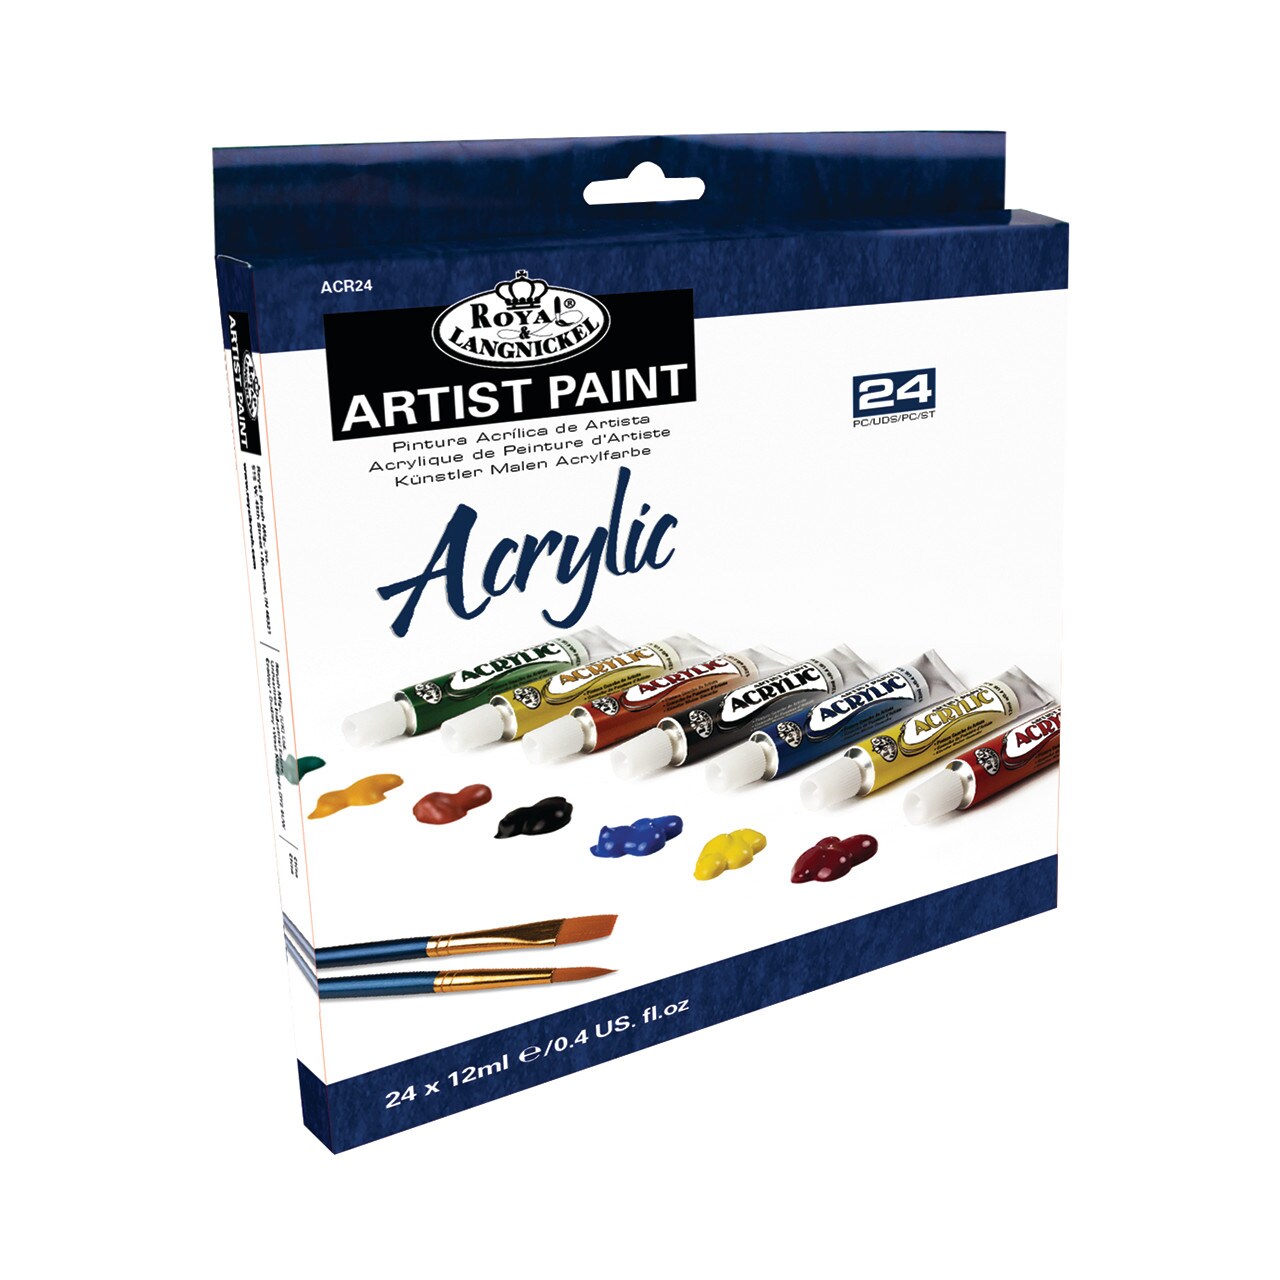 Royal Brush Acrylic Artist Paint Set, 24-Colors